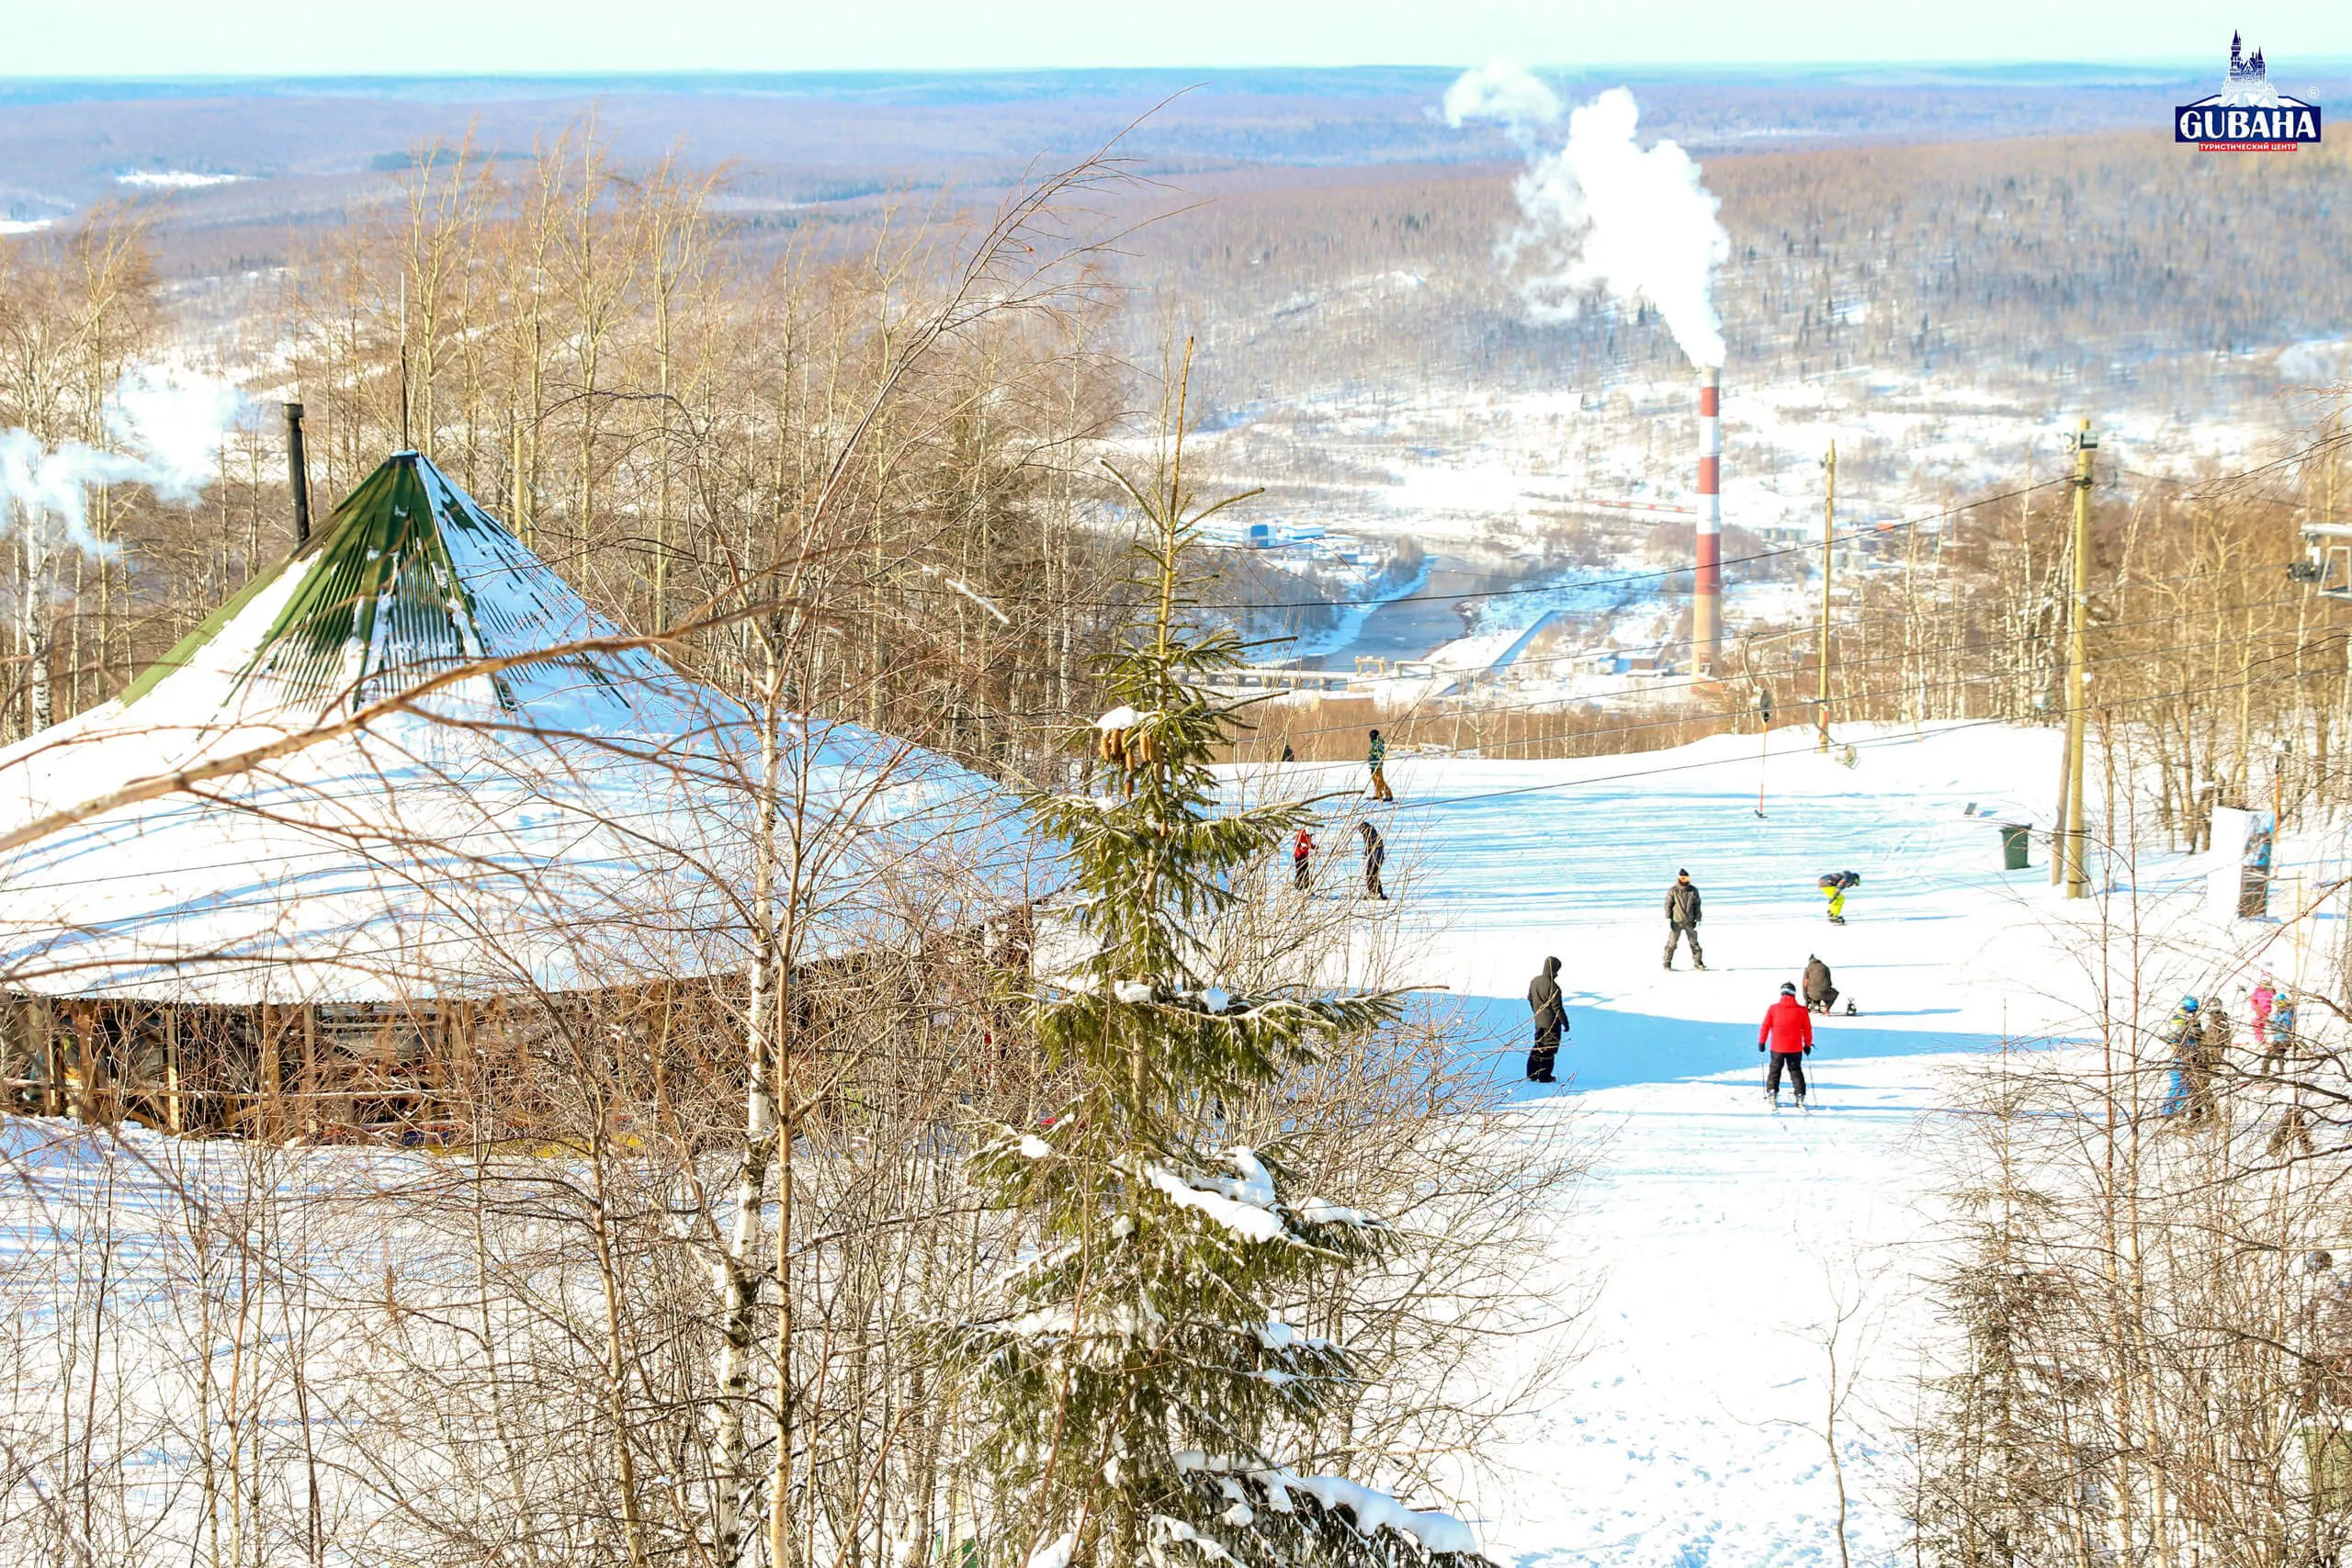 Gybaha in Russia, Europe | Snowboarding,Skiing - Rated 3.9